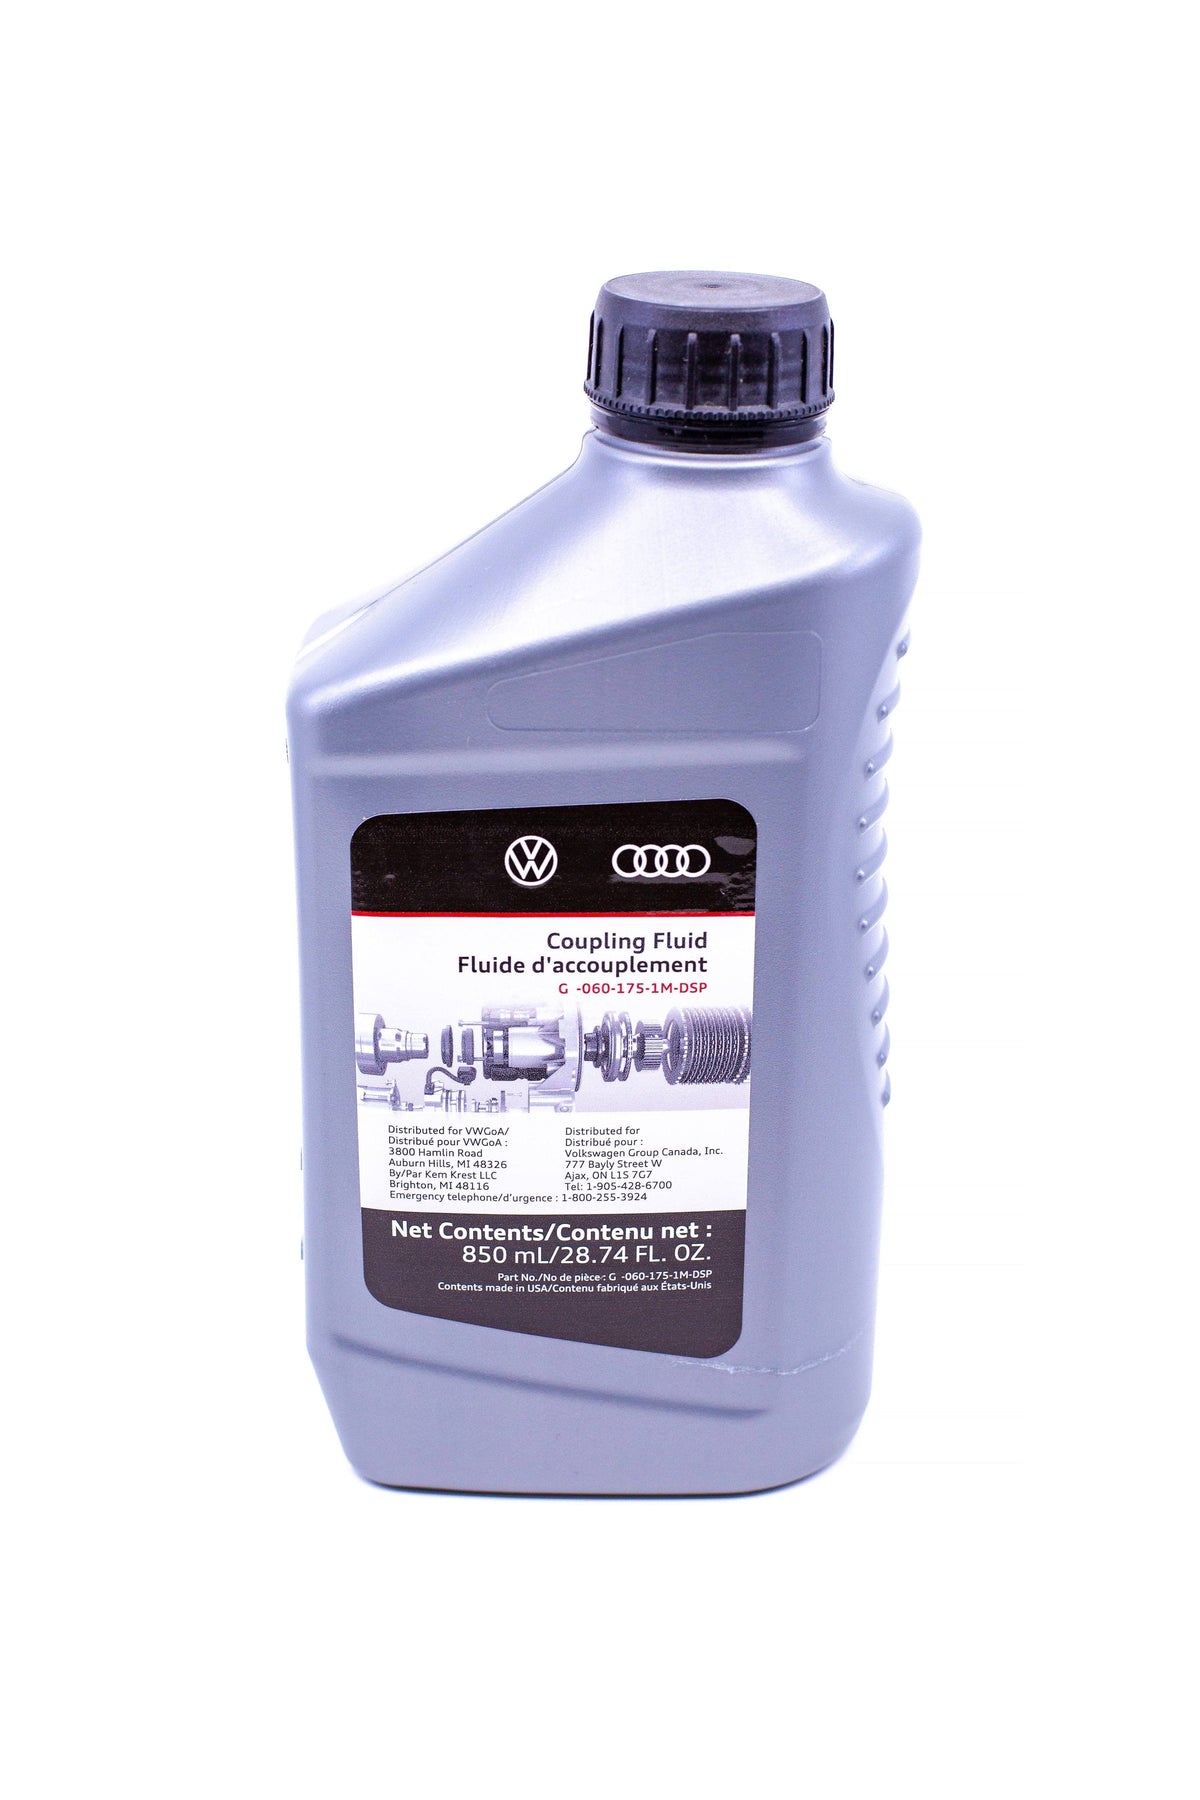 Haldex Fluid / Haldex Coupling Fluid – Westway Oils